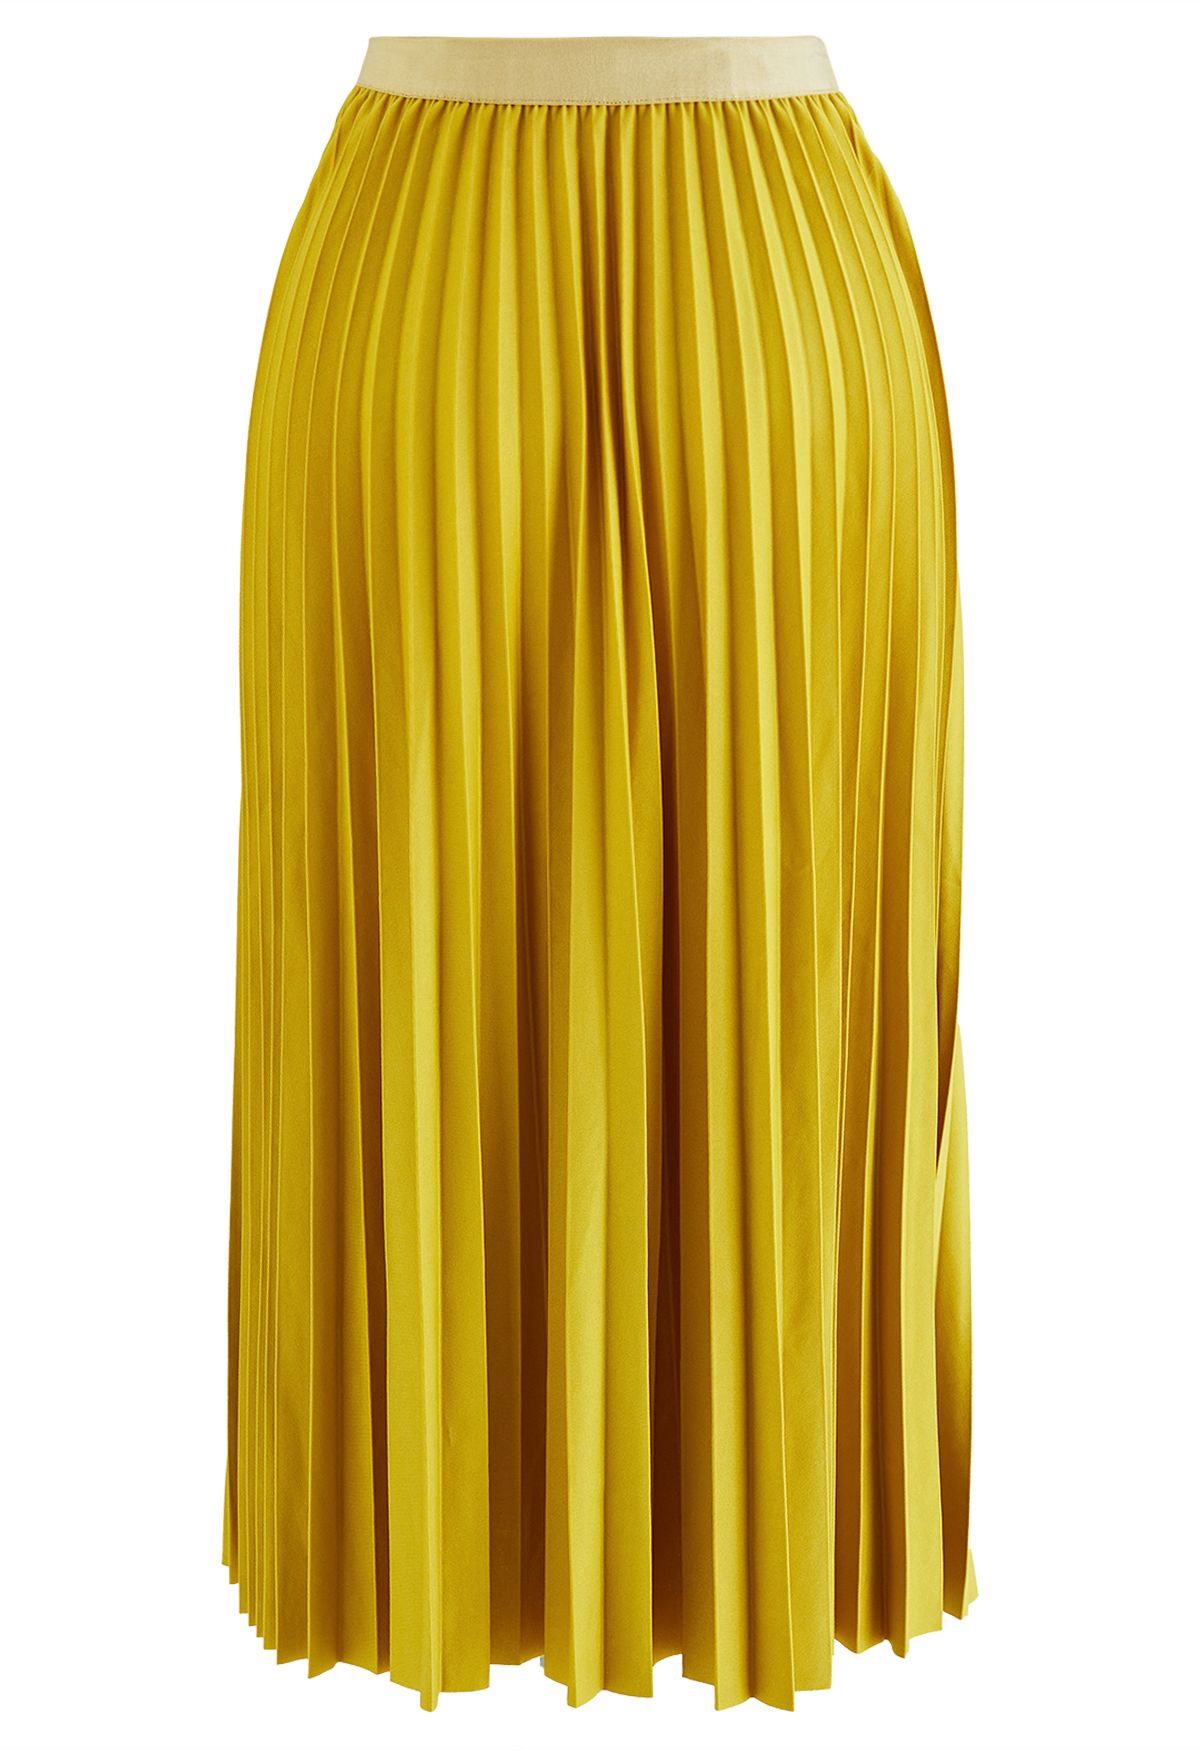 Simplicity Pleated Midi Skirt in Mustard - Retro, Indie and Unique Fashion